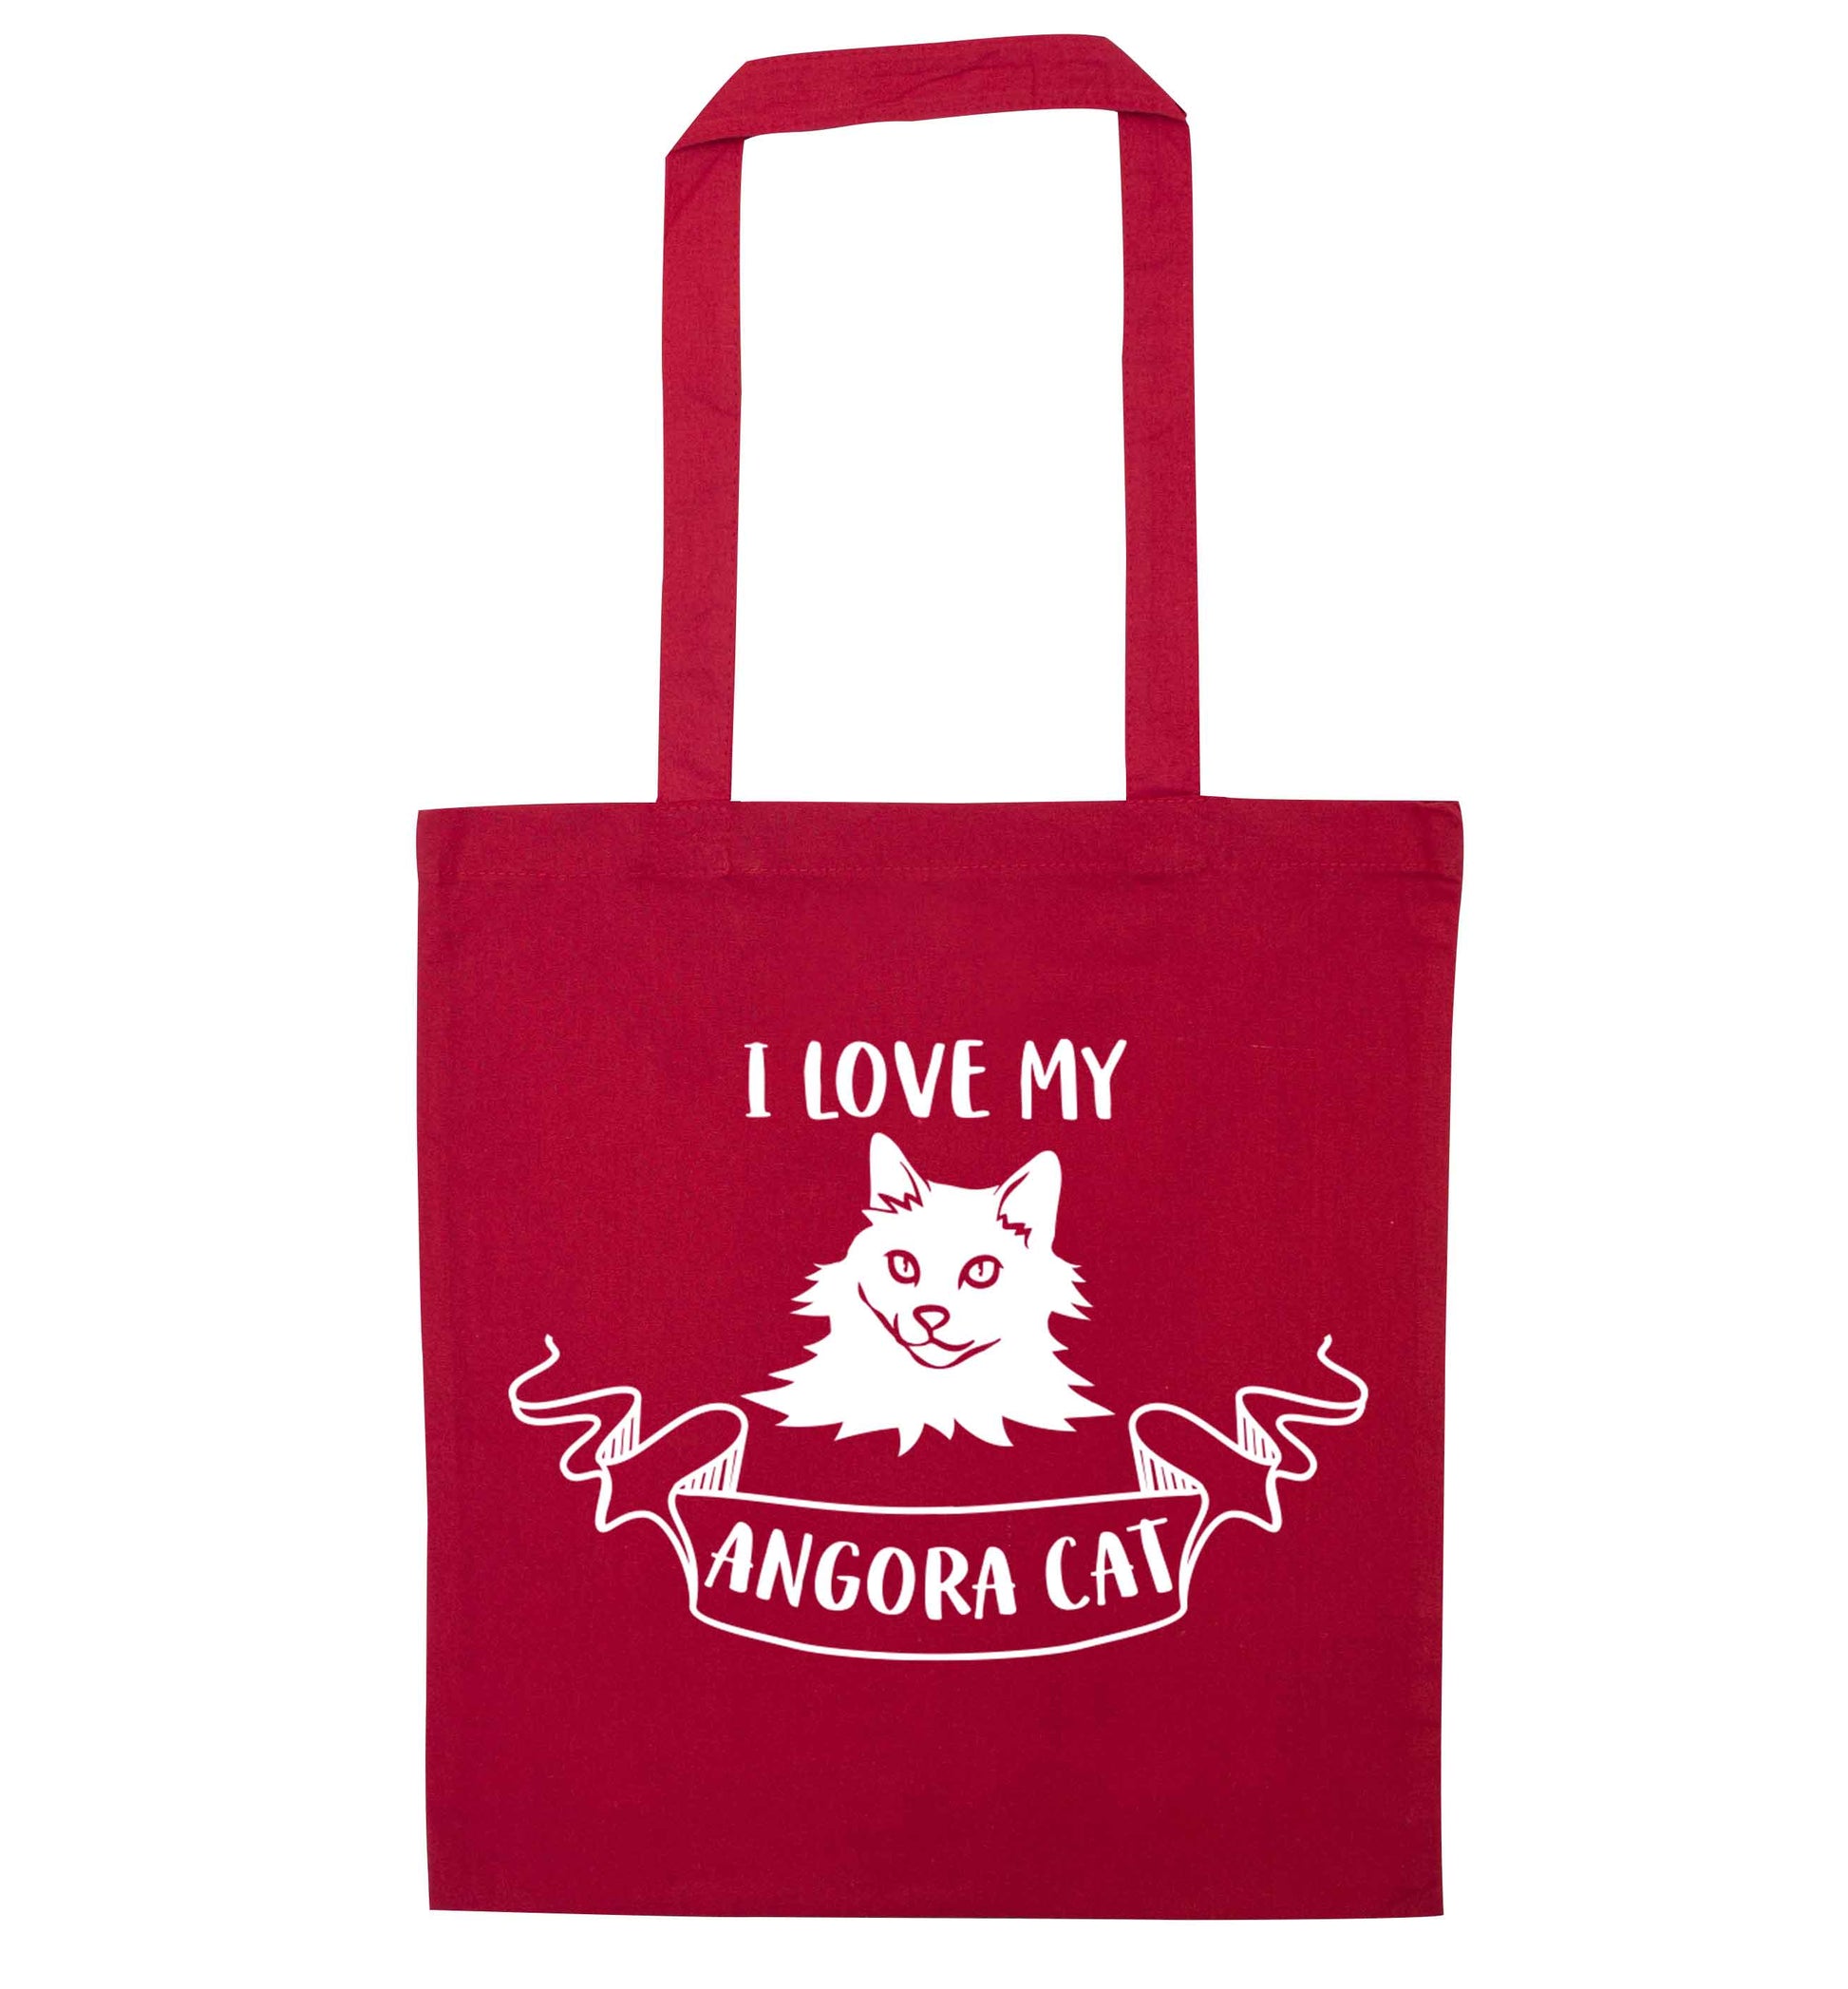 I love my angora cat red tote bag